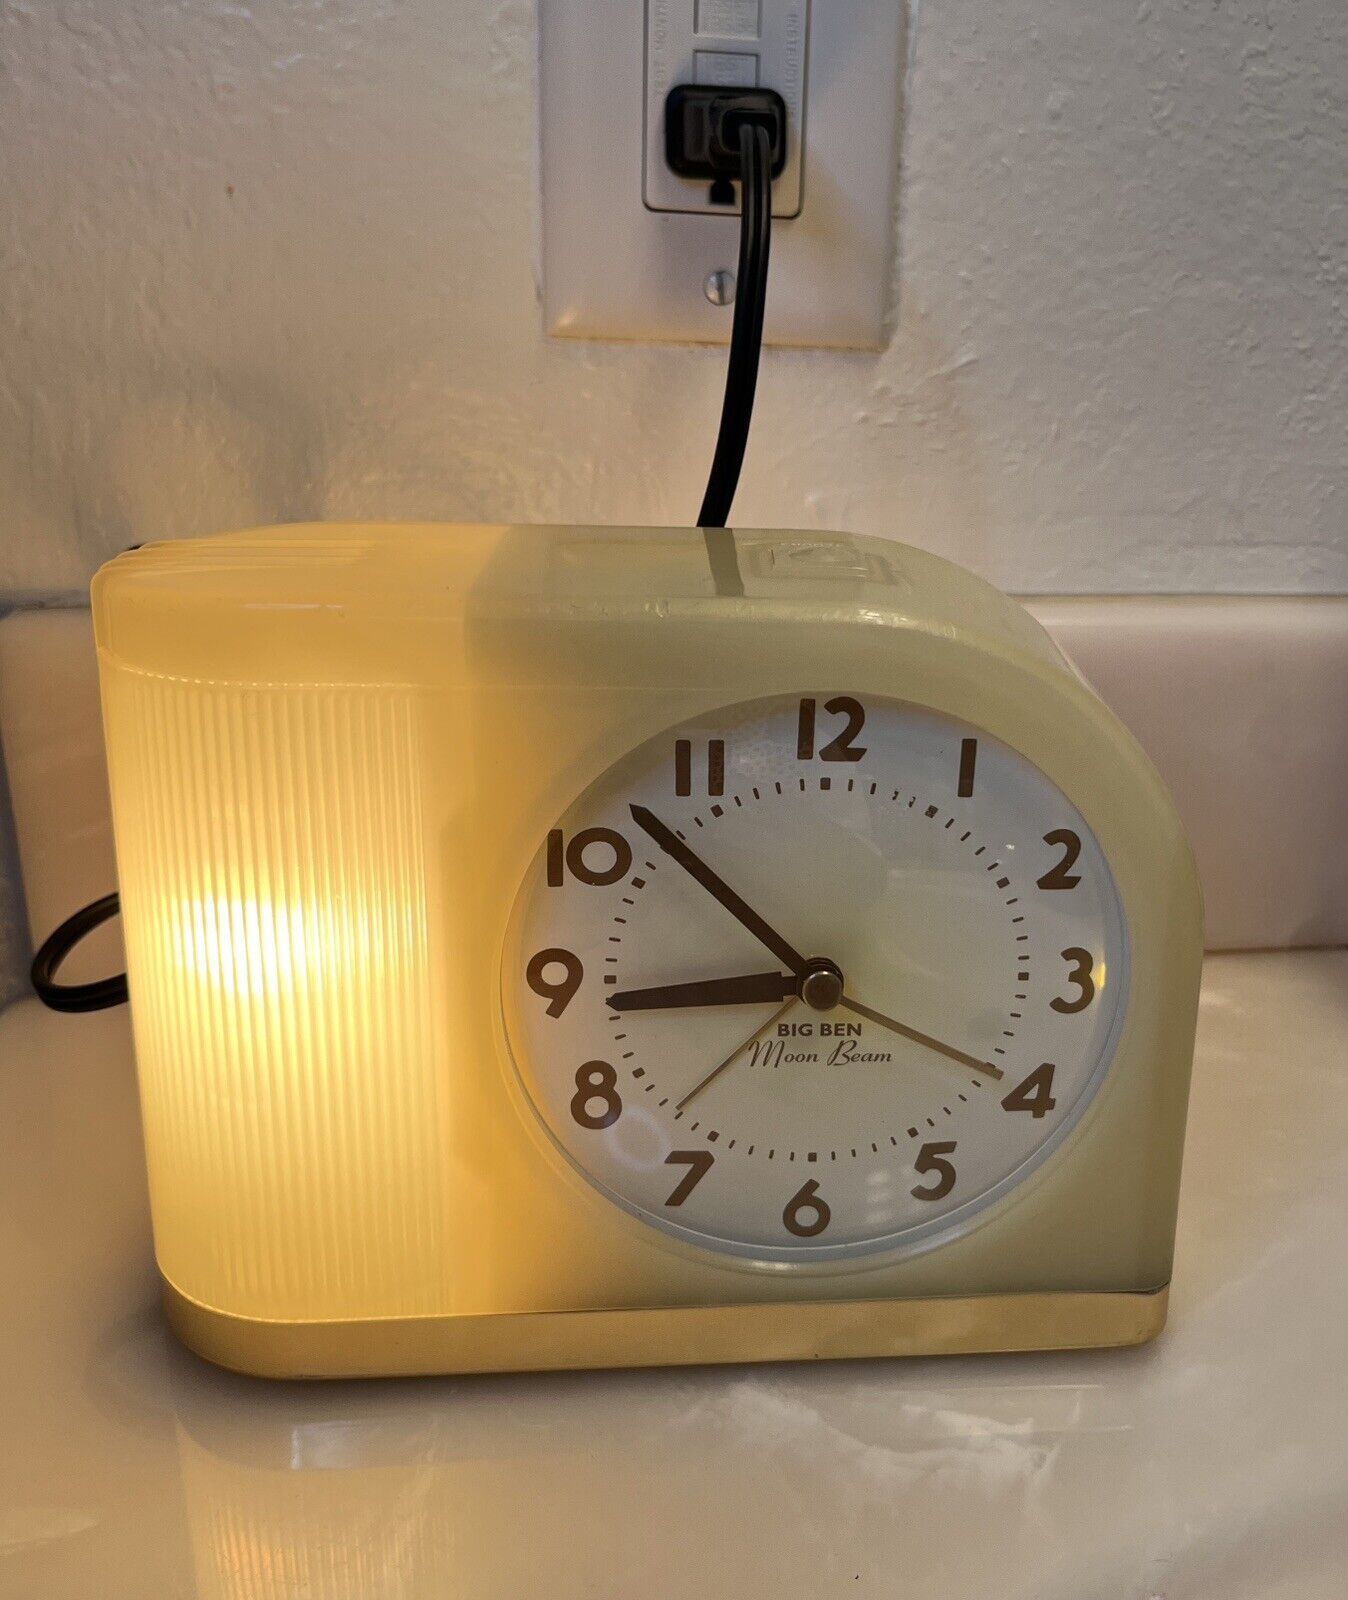 VTG Westclox Big Ben Moon Beam 43000 Alarm Clock Yellow Retro Styled TESTED